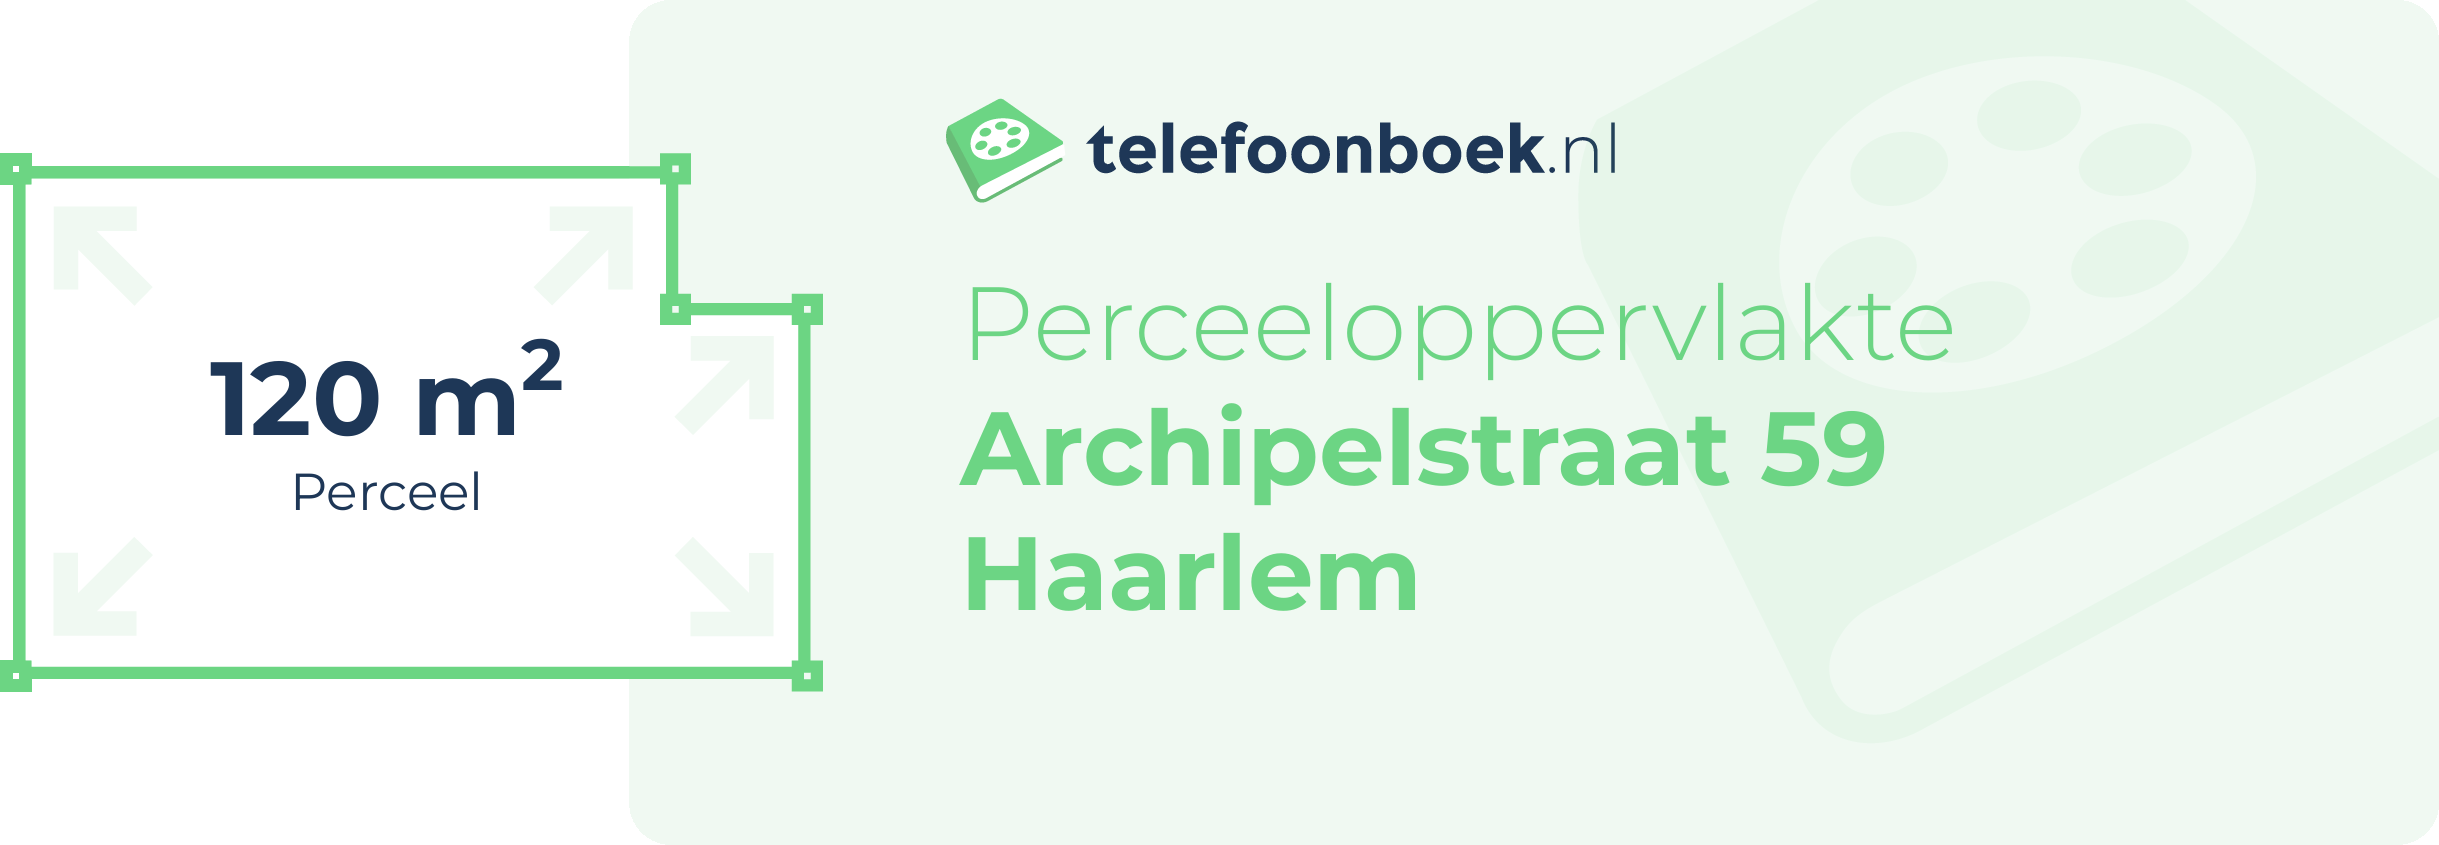 Perceeloppervlakte Archipelstraat 59 Haarlem